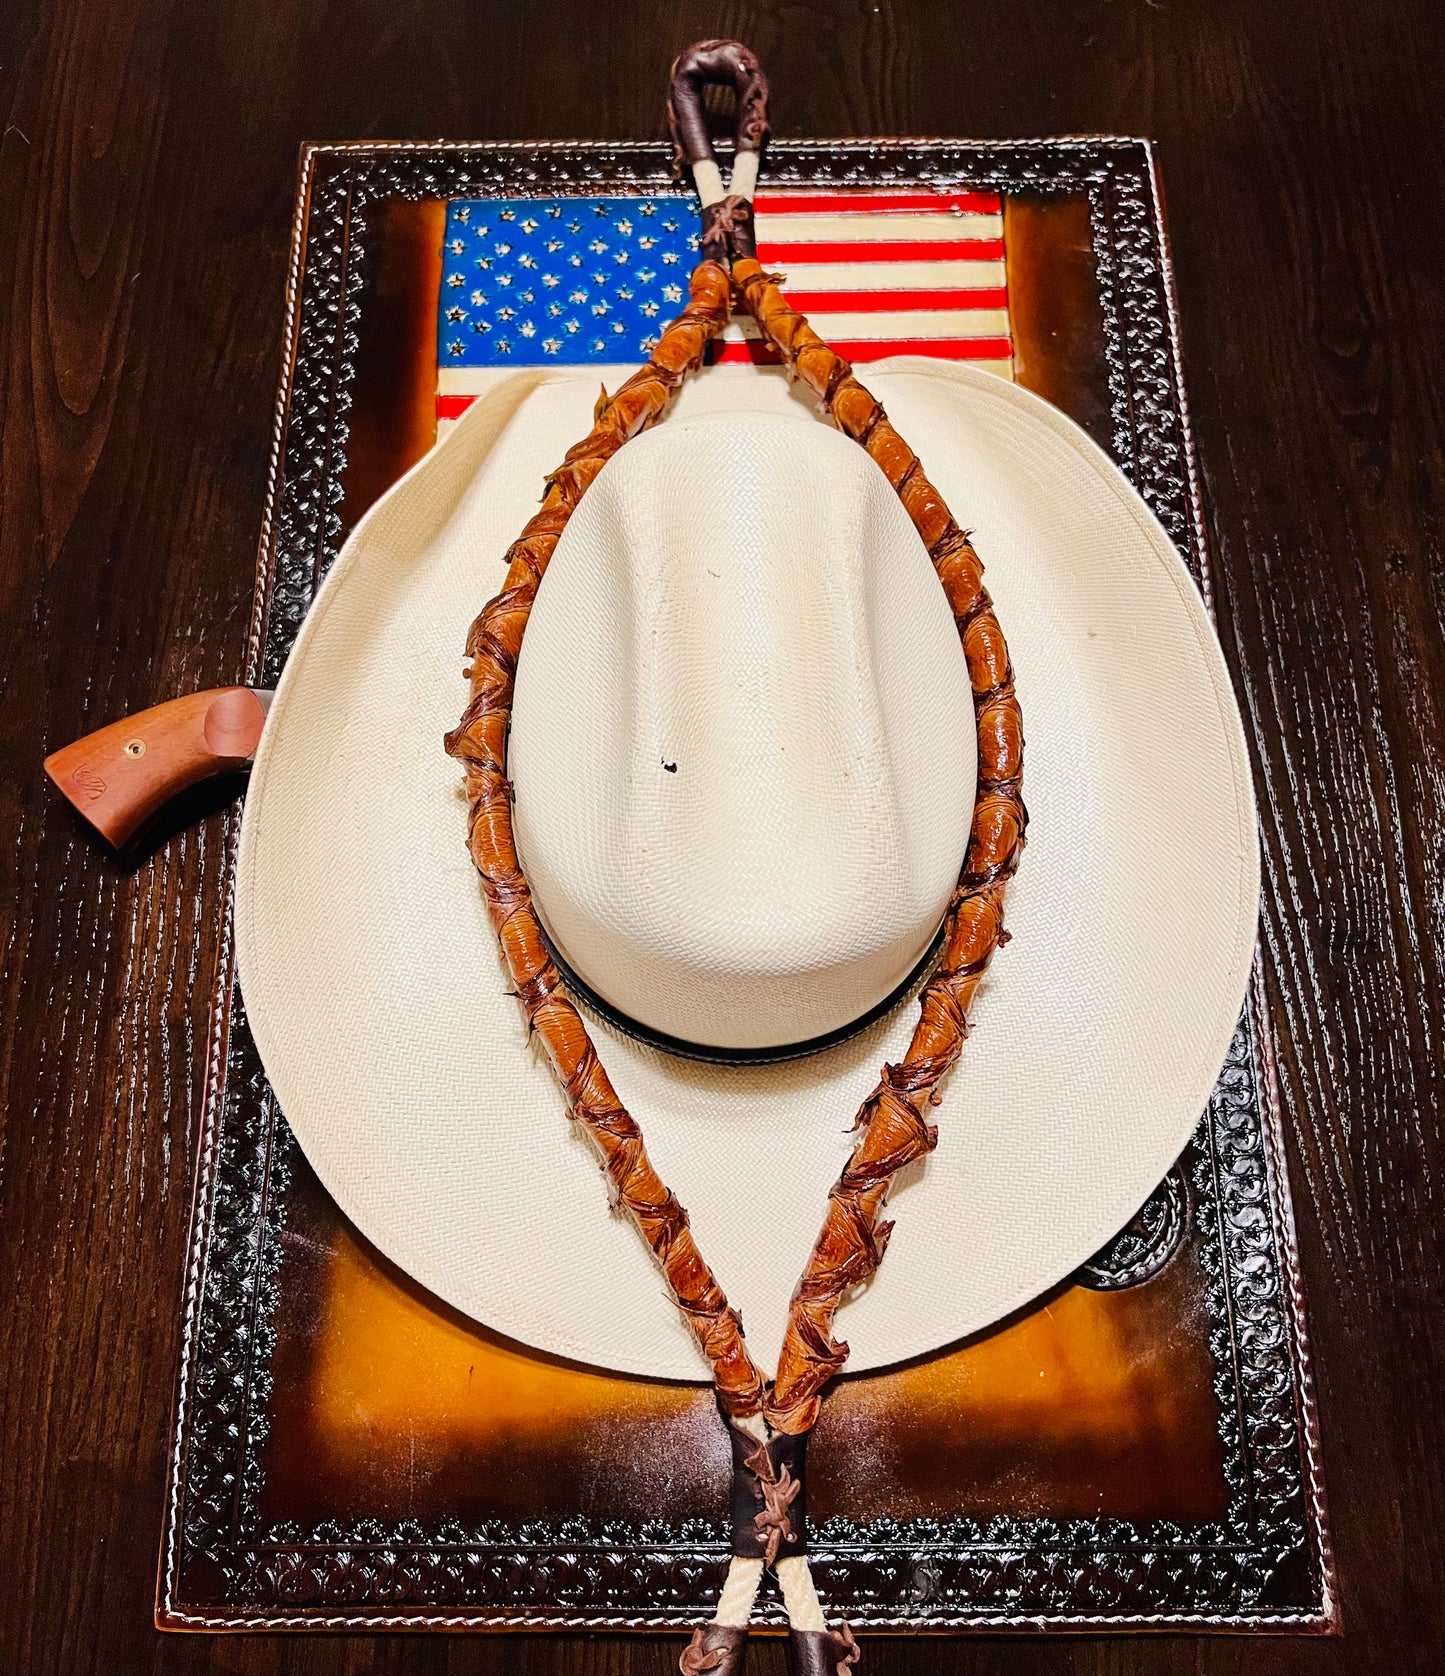 Jesse Marroquin’s Red, White, & Blue Cowboy Edition Gun Holster Cowboy Hat Rack.